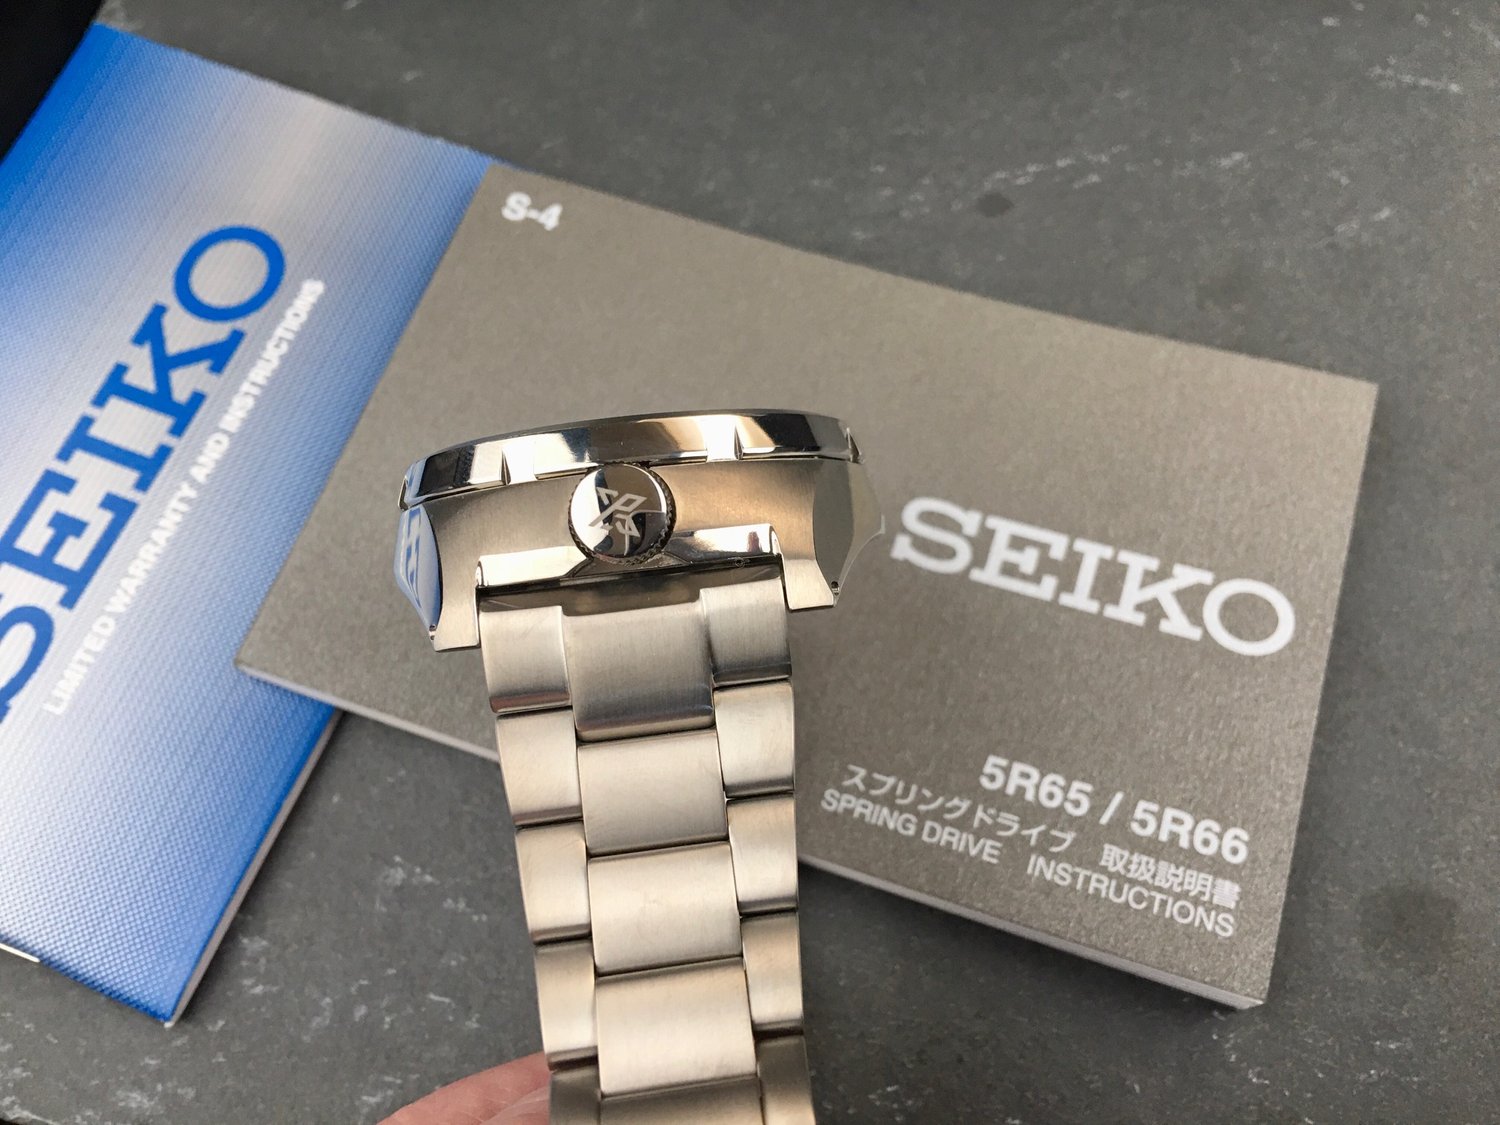 Seiko Prospex Landmaster SBDB015 — EOT Watches